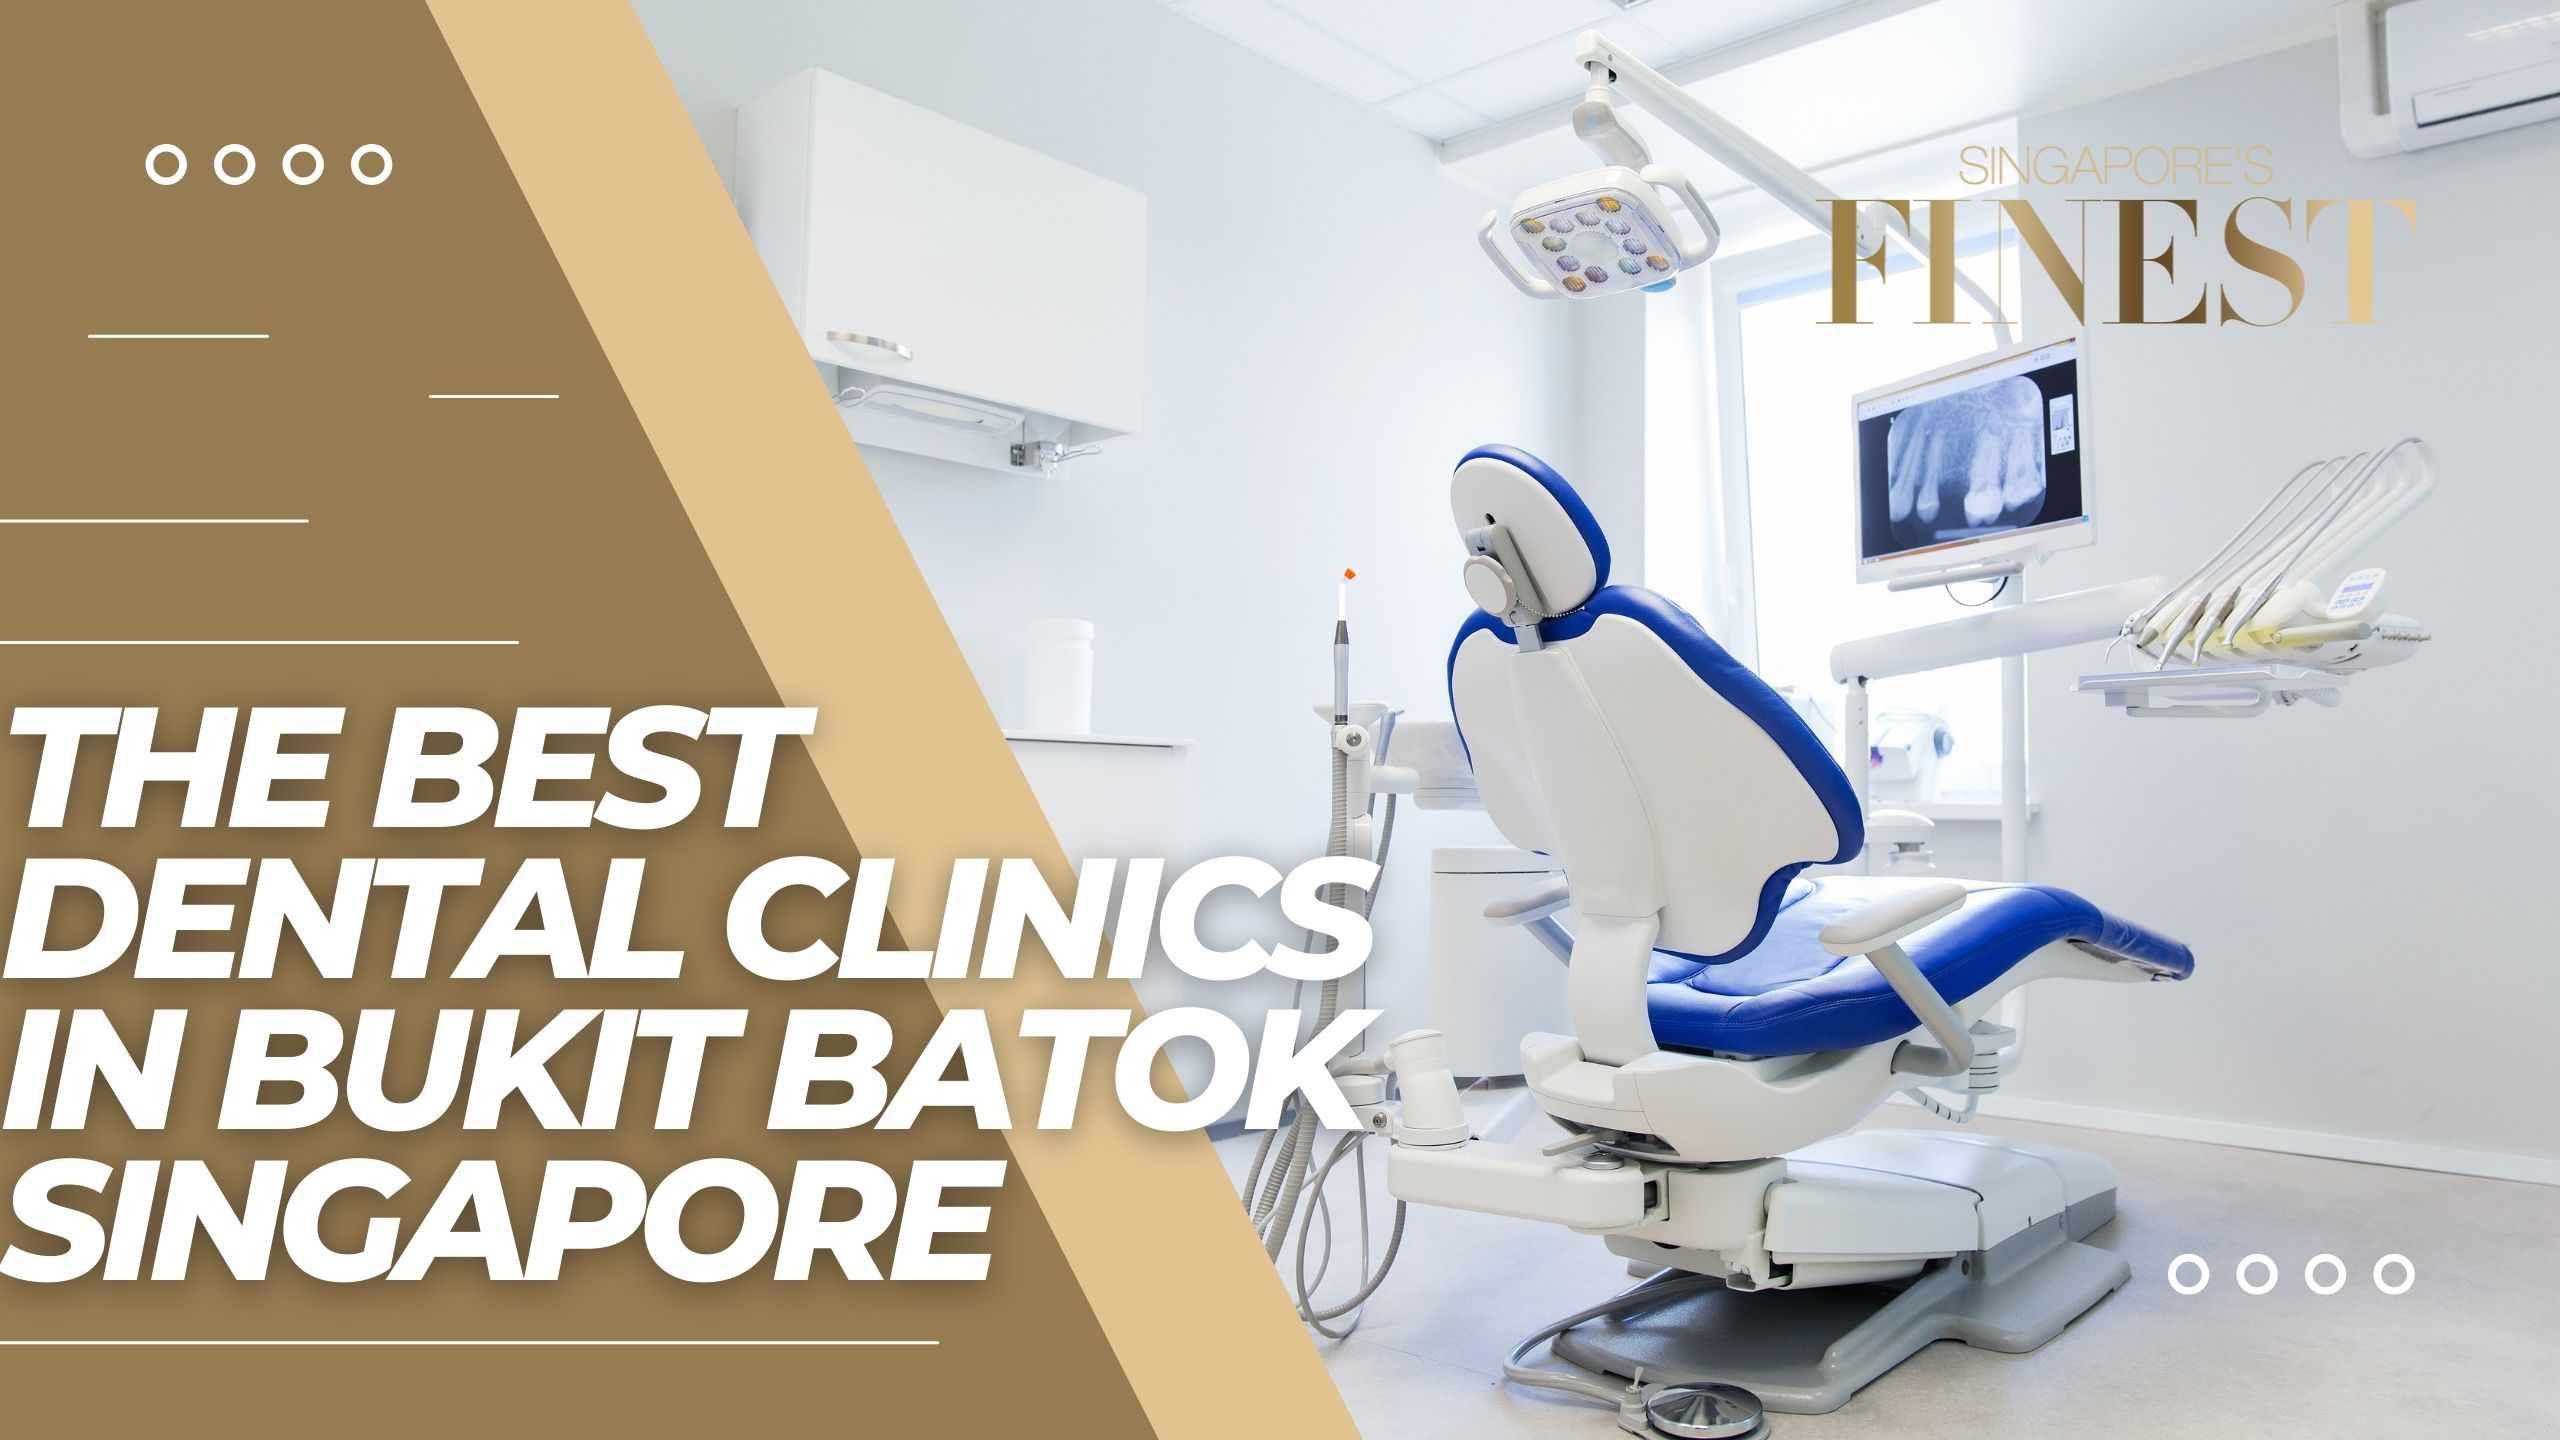 The Finest Dental Clinics In Bukit Batok Singapore